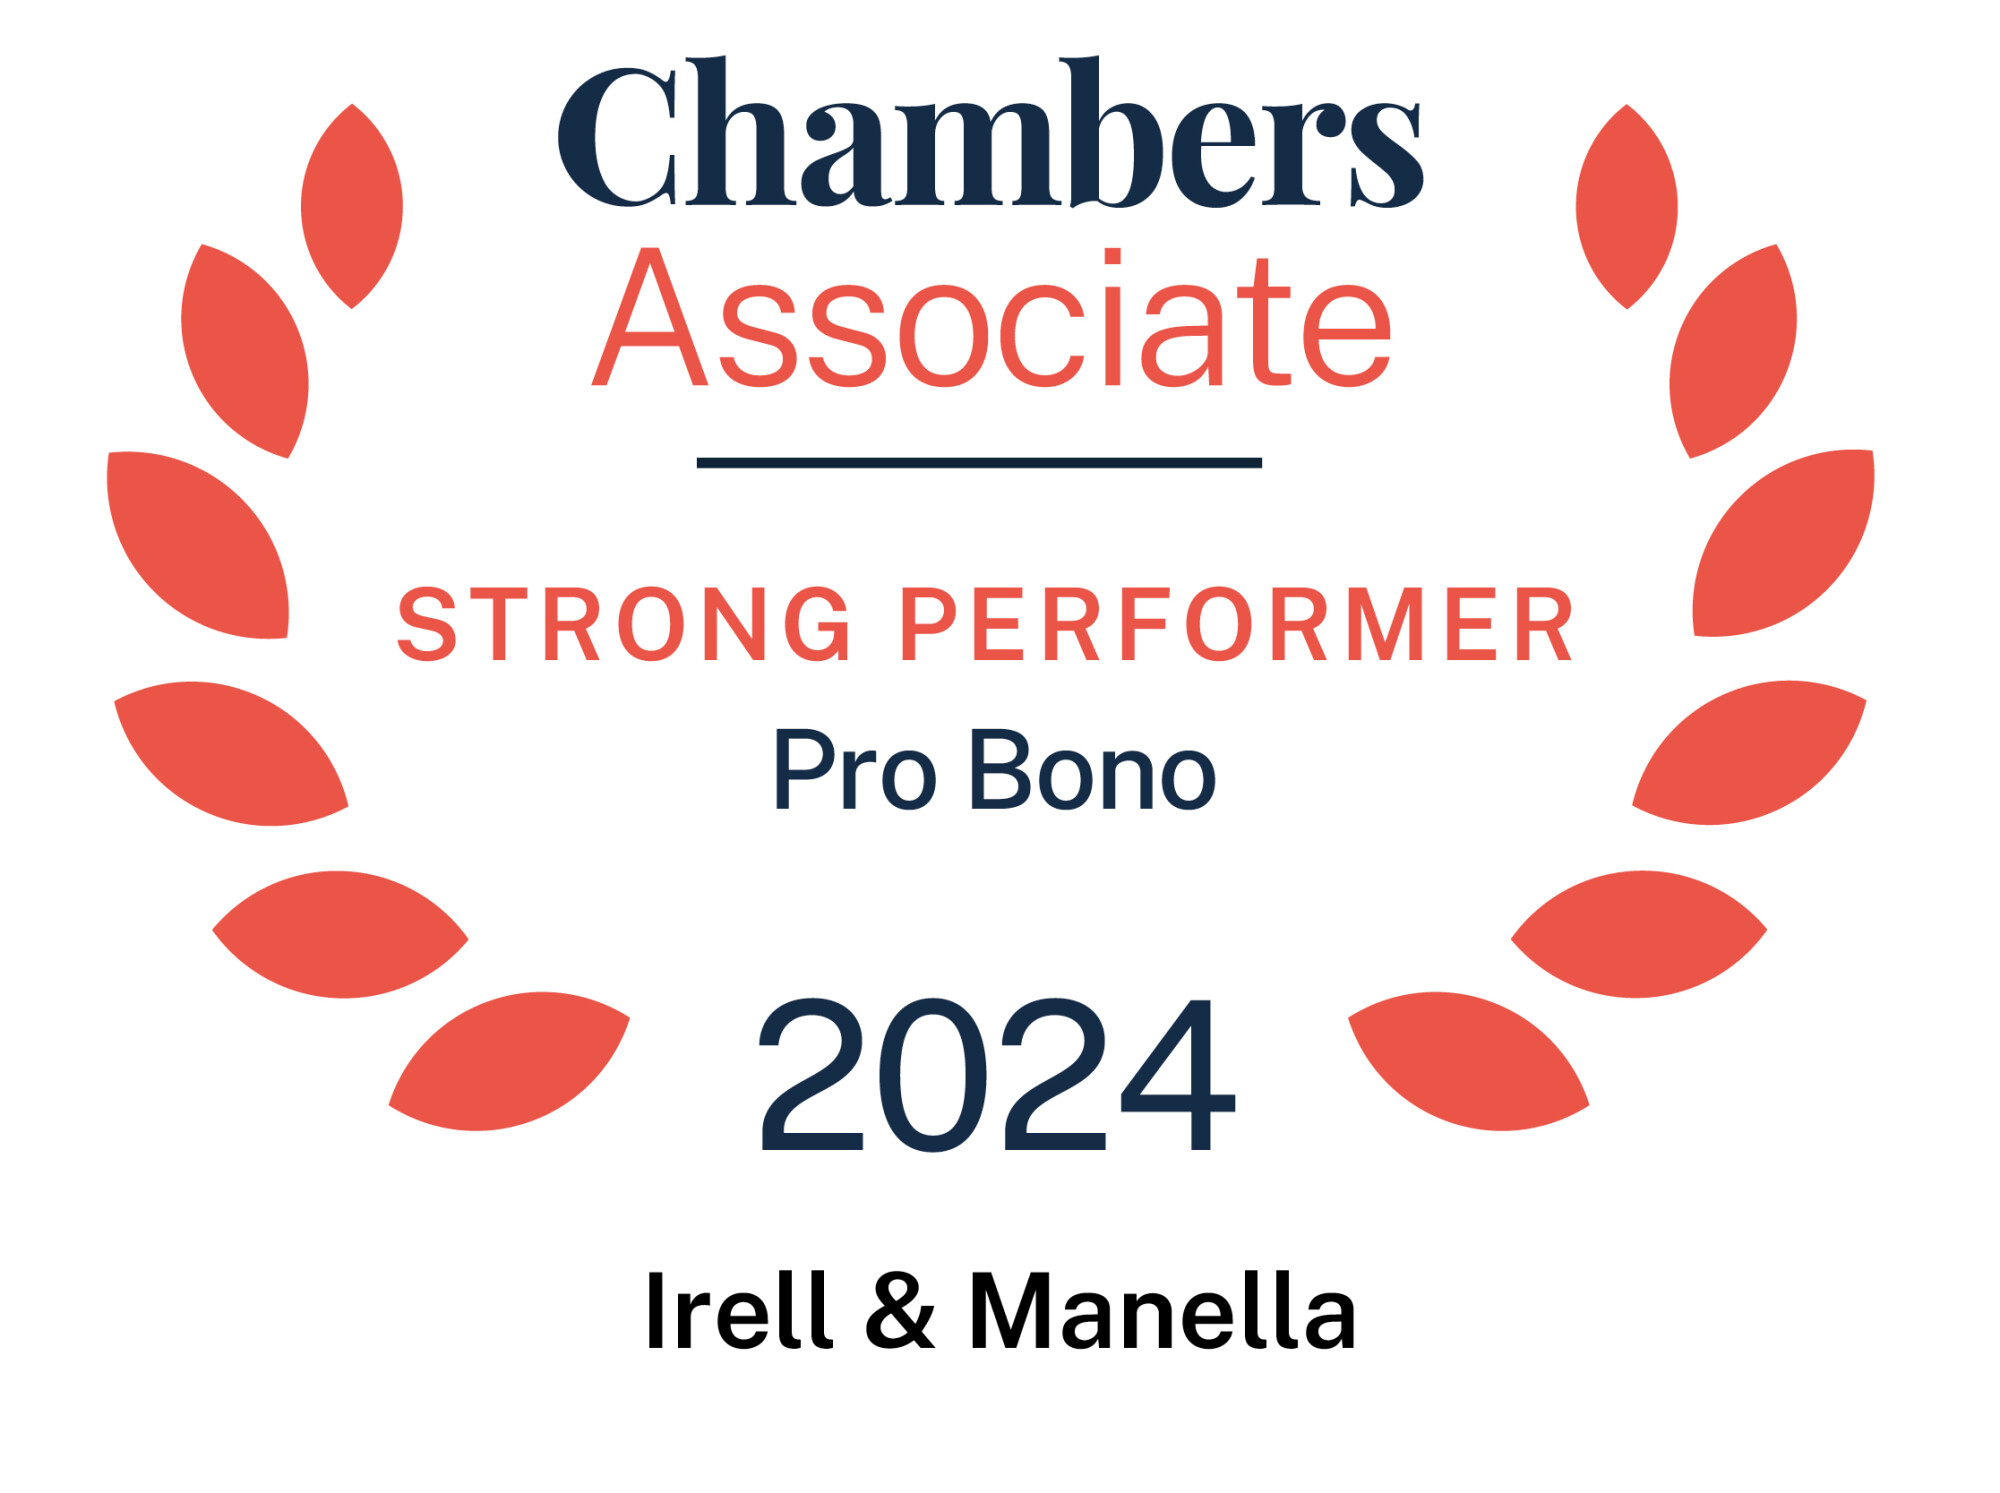 Chambers Associate Strong Performer Pro Bono 2024